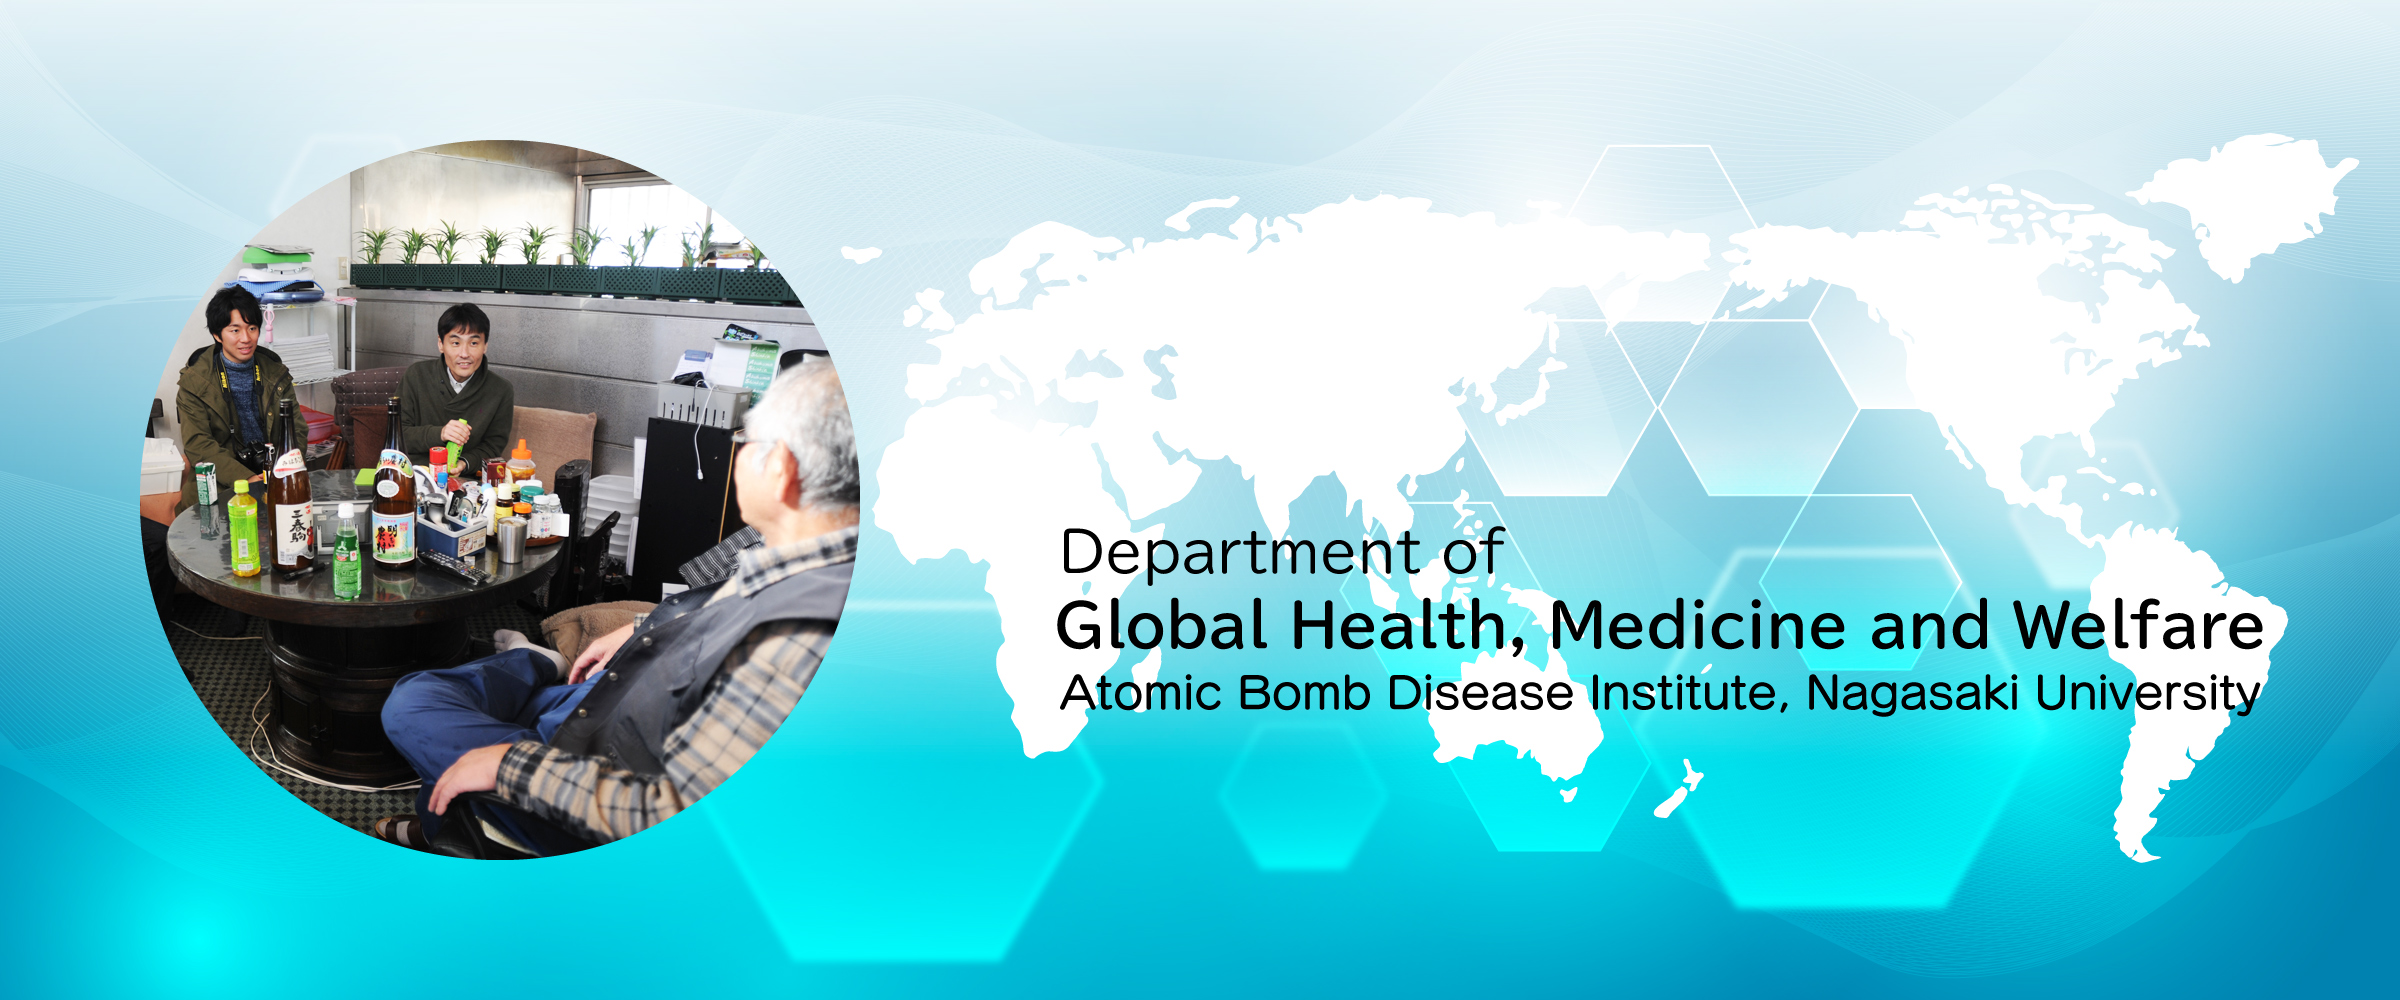 Department of Global Health, Medicine and Welfare, Atomic Bomb Disease Institute, Nagasaki University